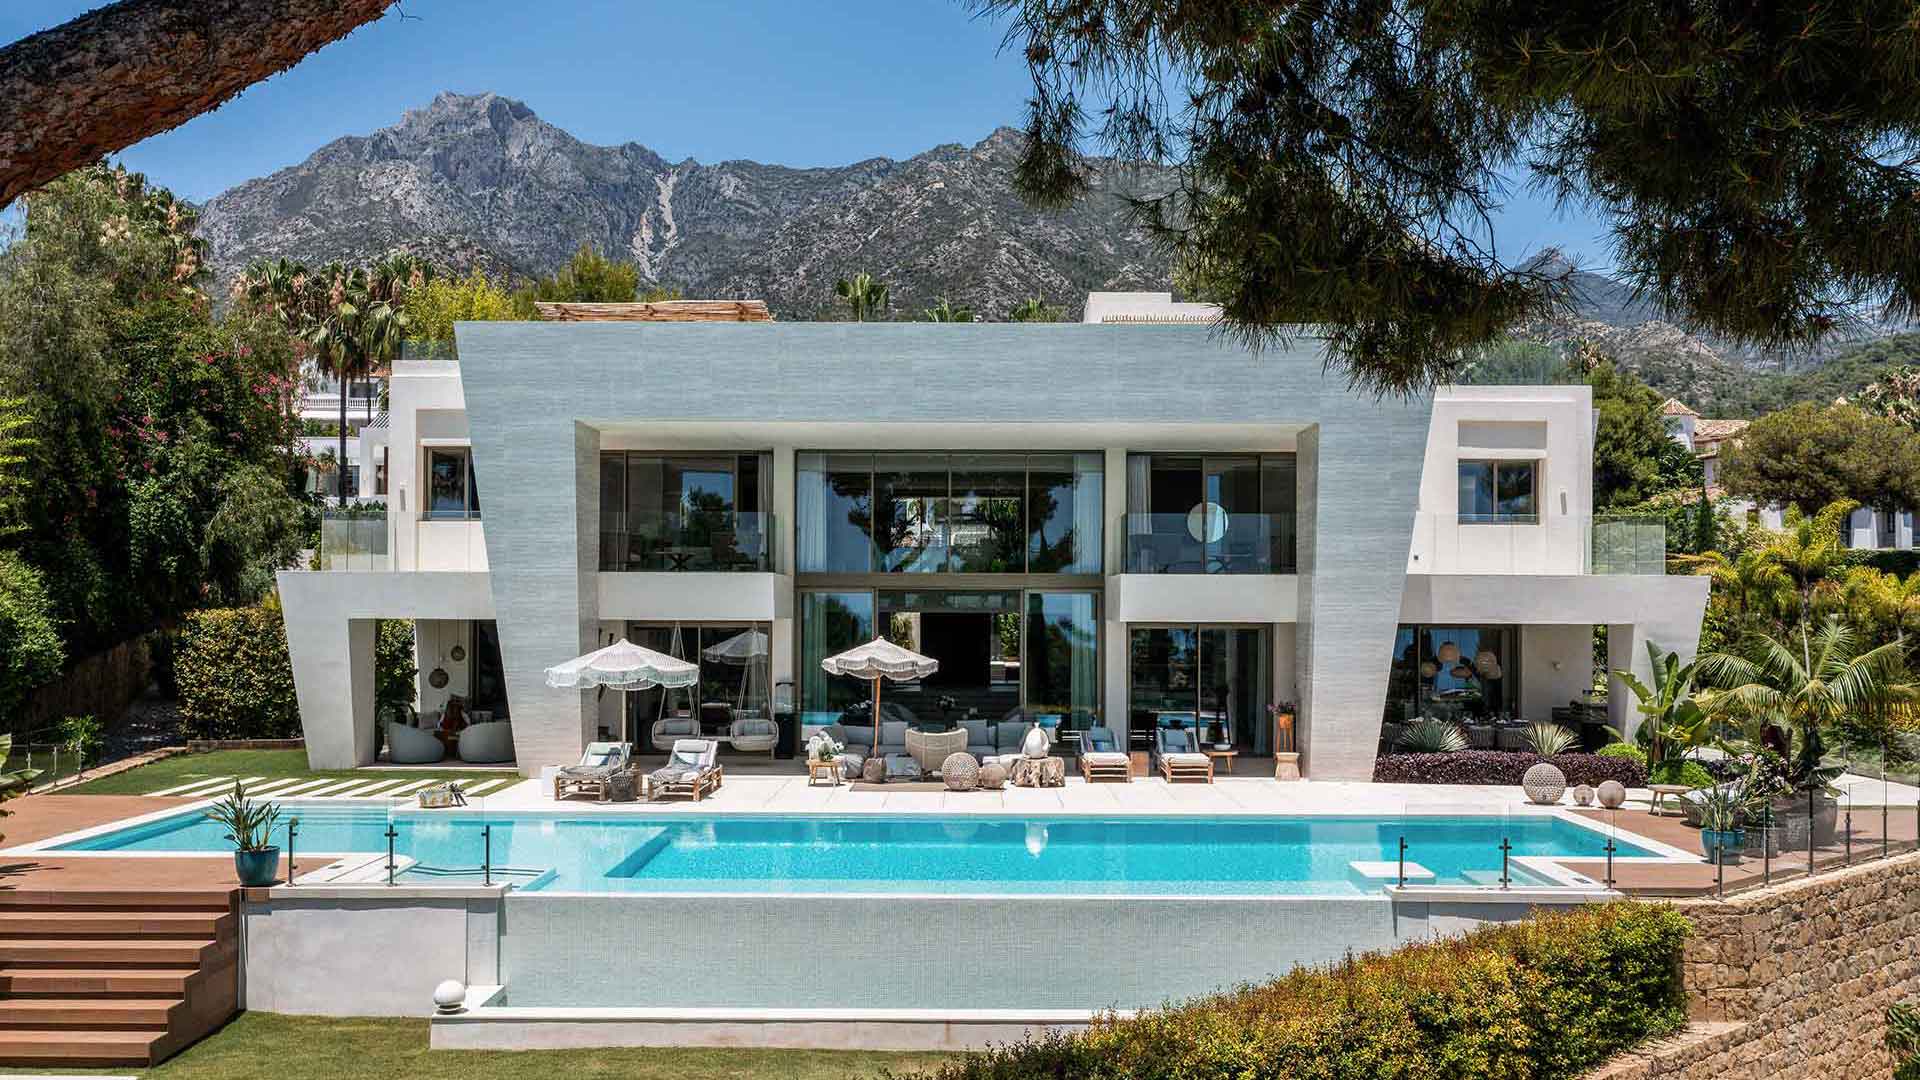 Villa Alena Marbella - Vue extérieure de la villa avec grande piscine